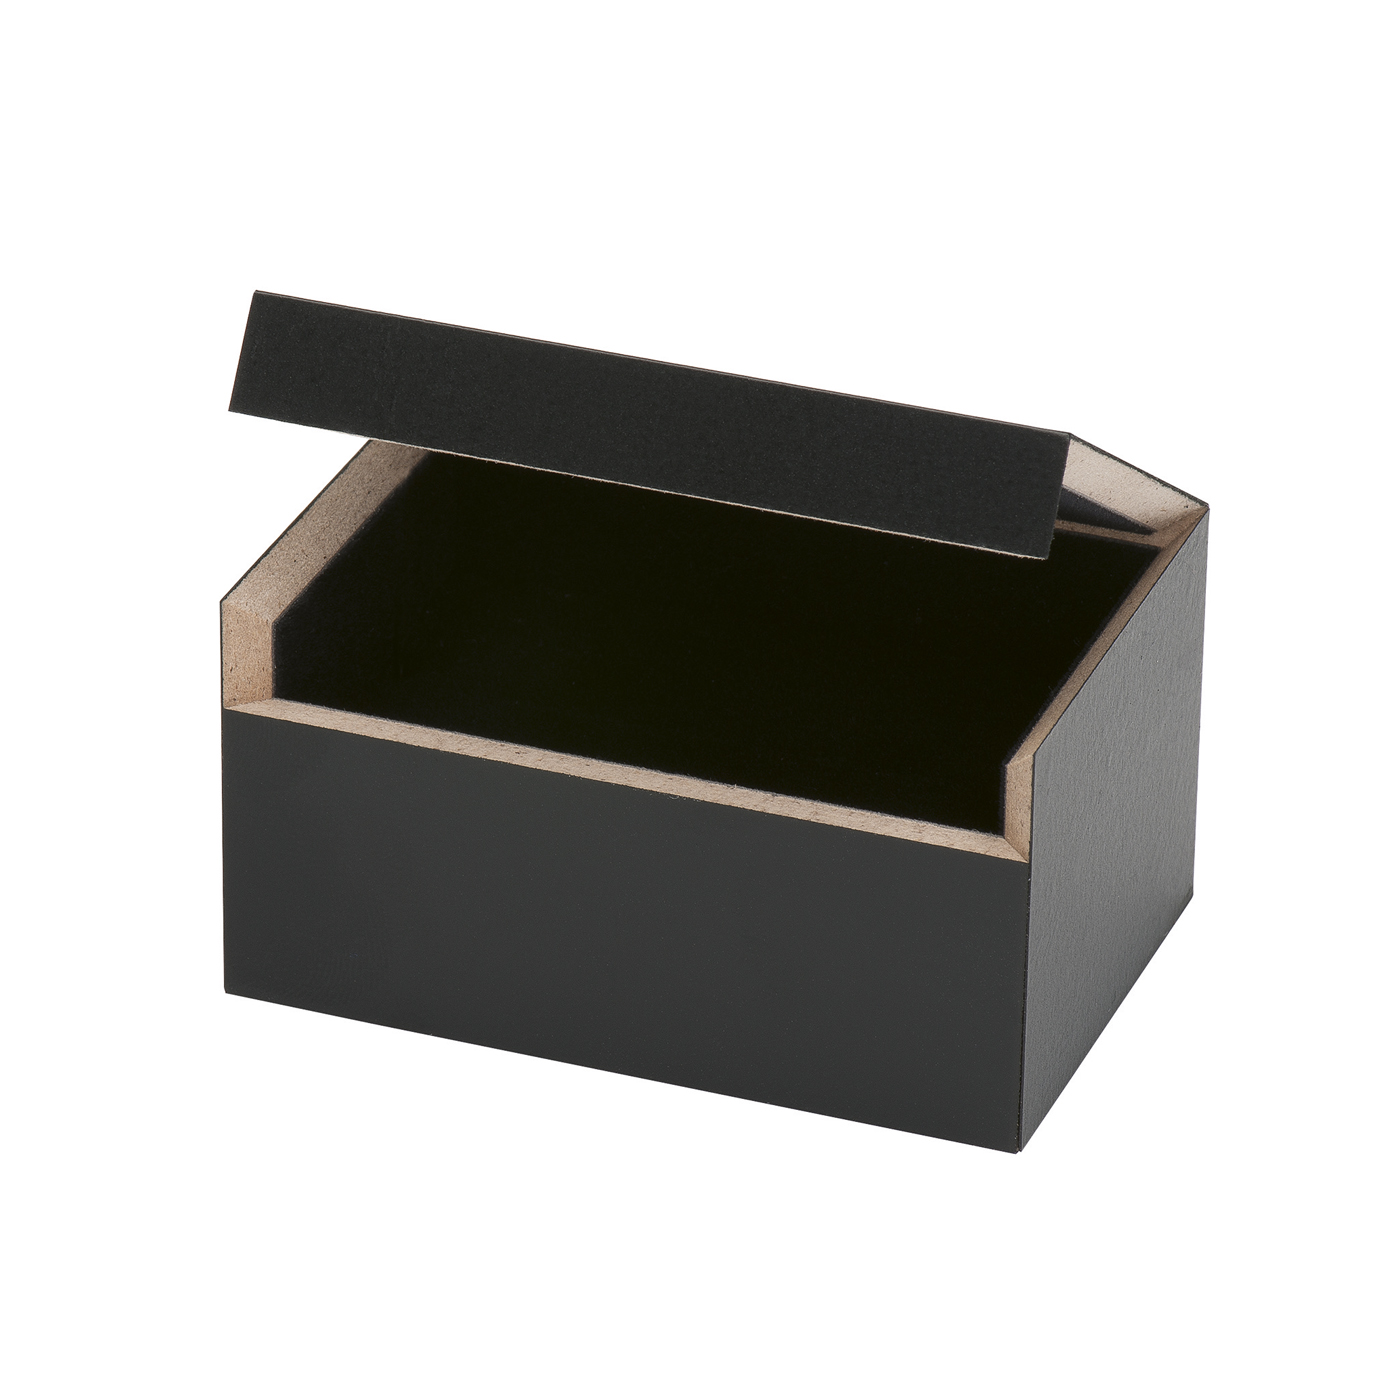 PICA-Design Schmucketui "Blackbox", 70 x 47 x 37 mm - 1 Stück